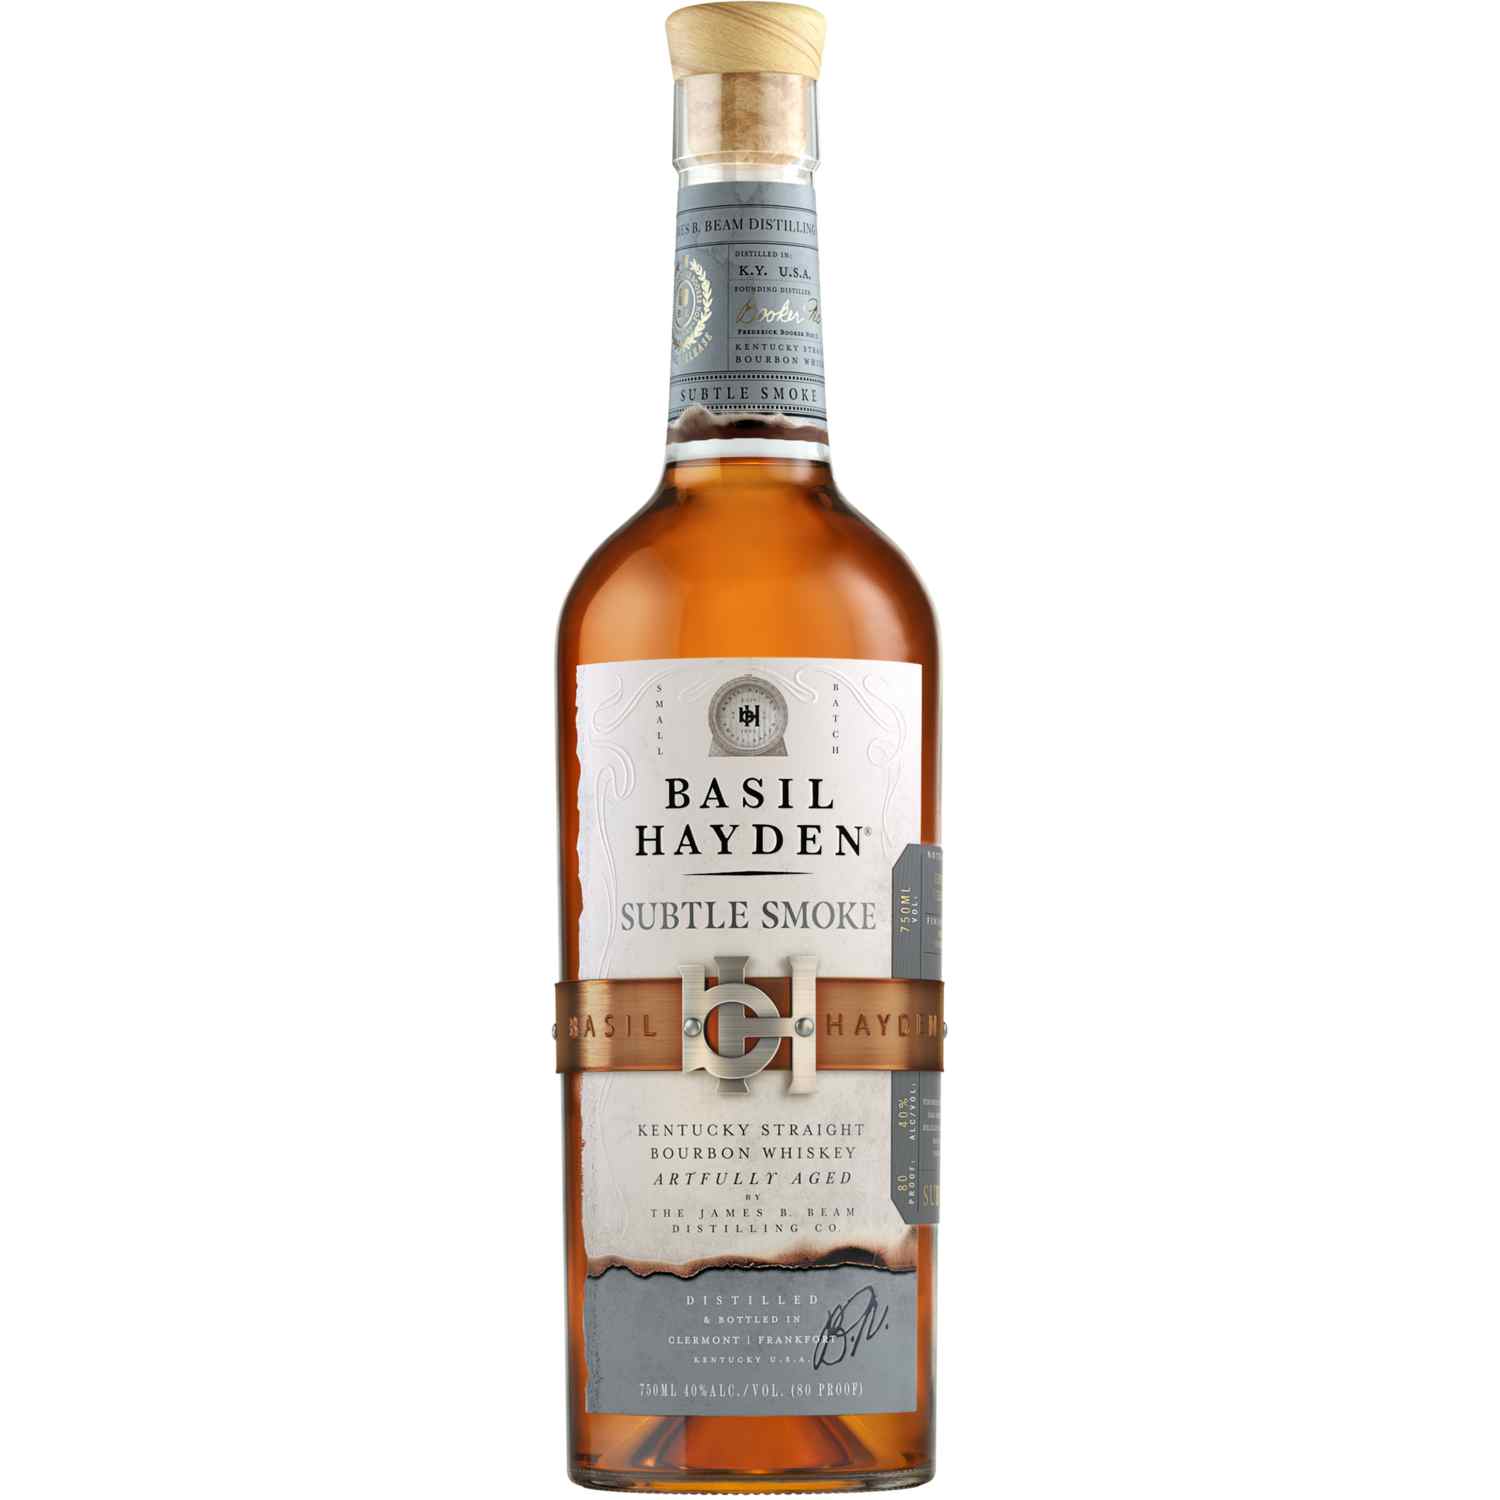 Basil Hayden Subtle Smoke Kentucky Straight Bourbon Whiskey